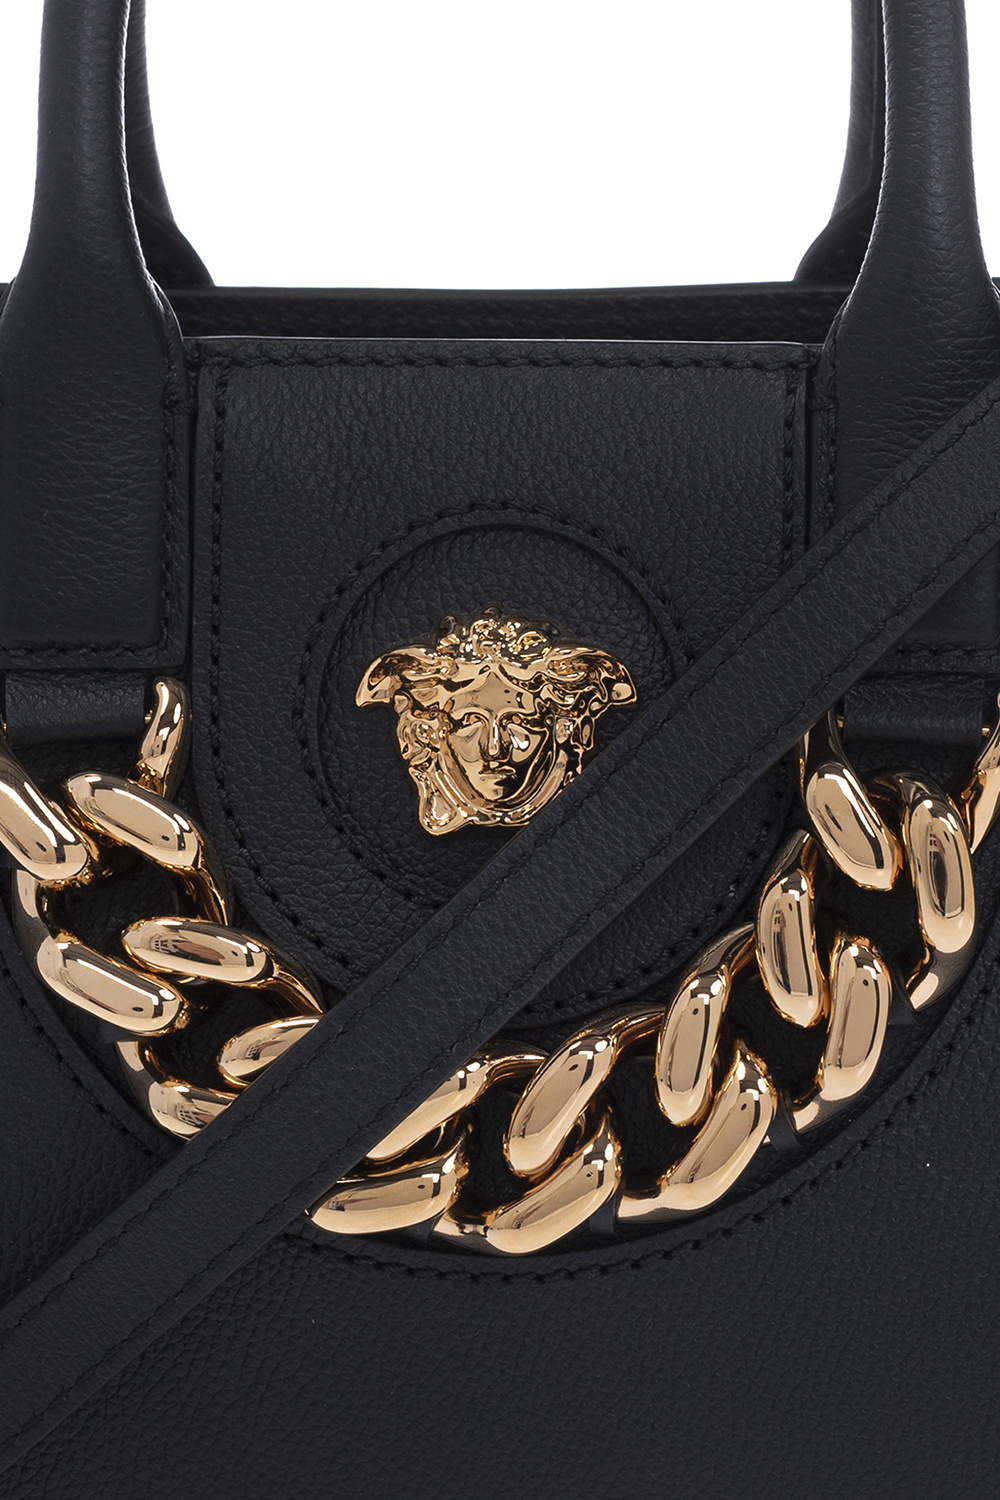 Versace ‘La Medusa Small’ shopper small bag